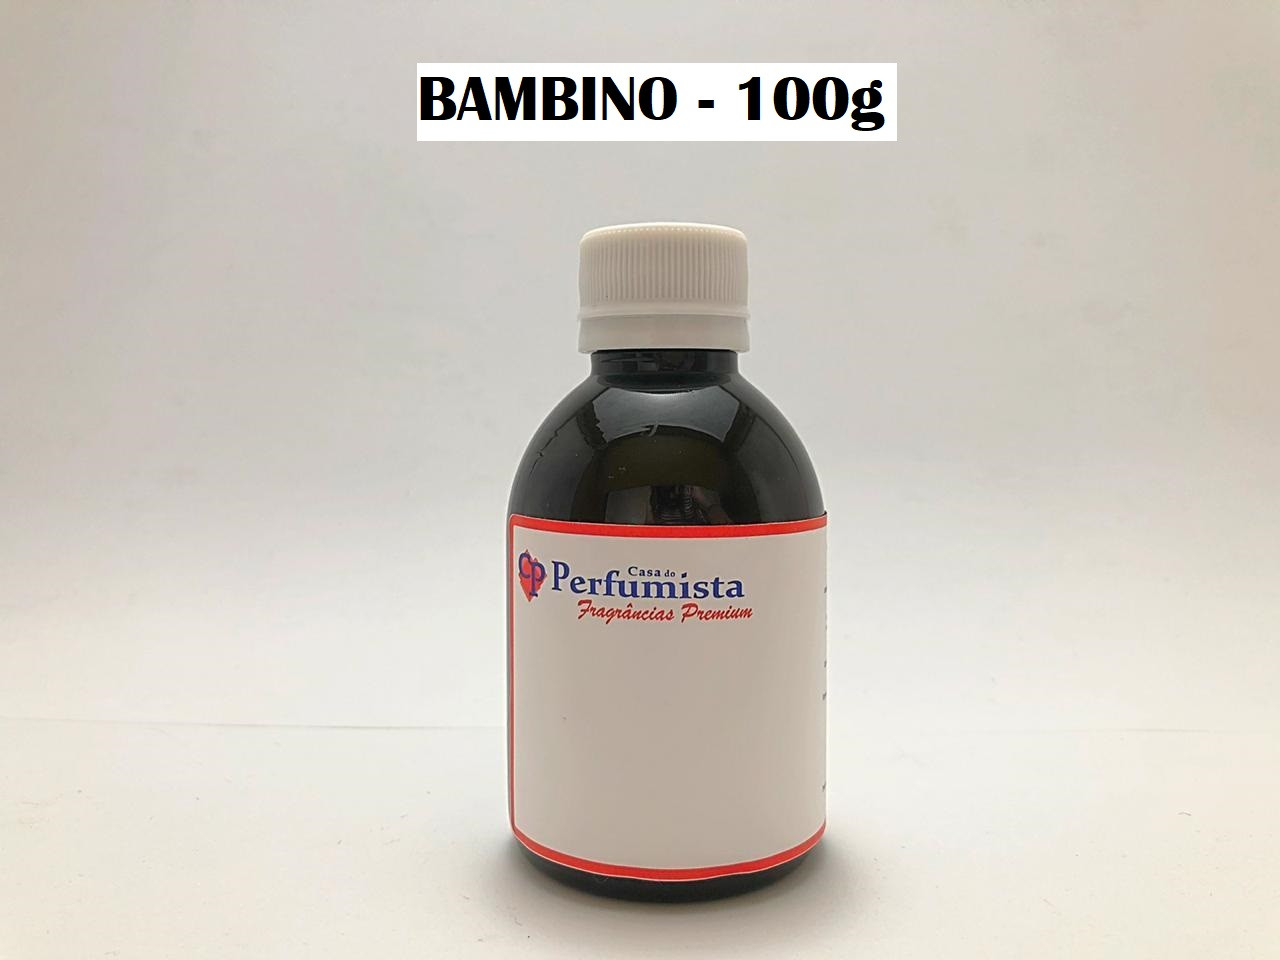 BAMBINO - 100g